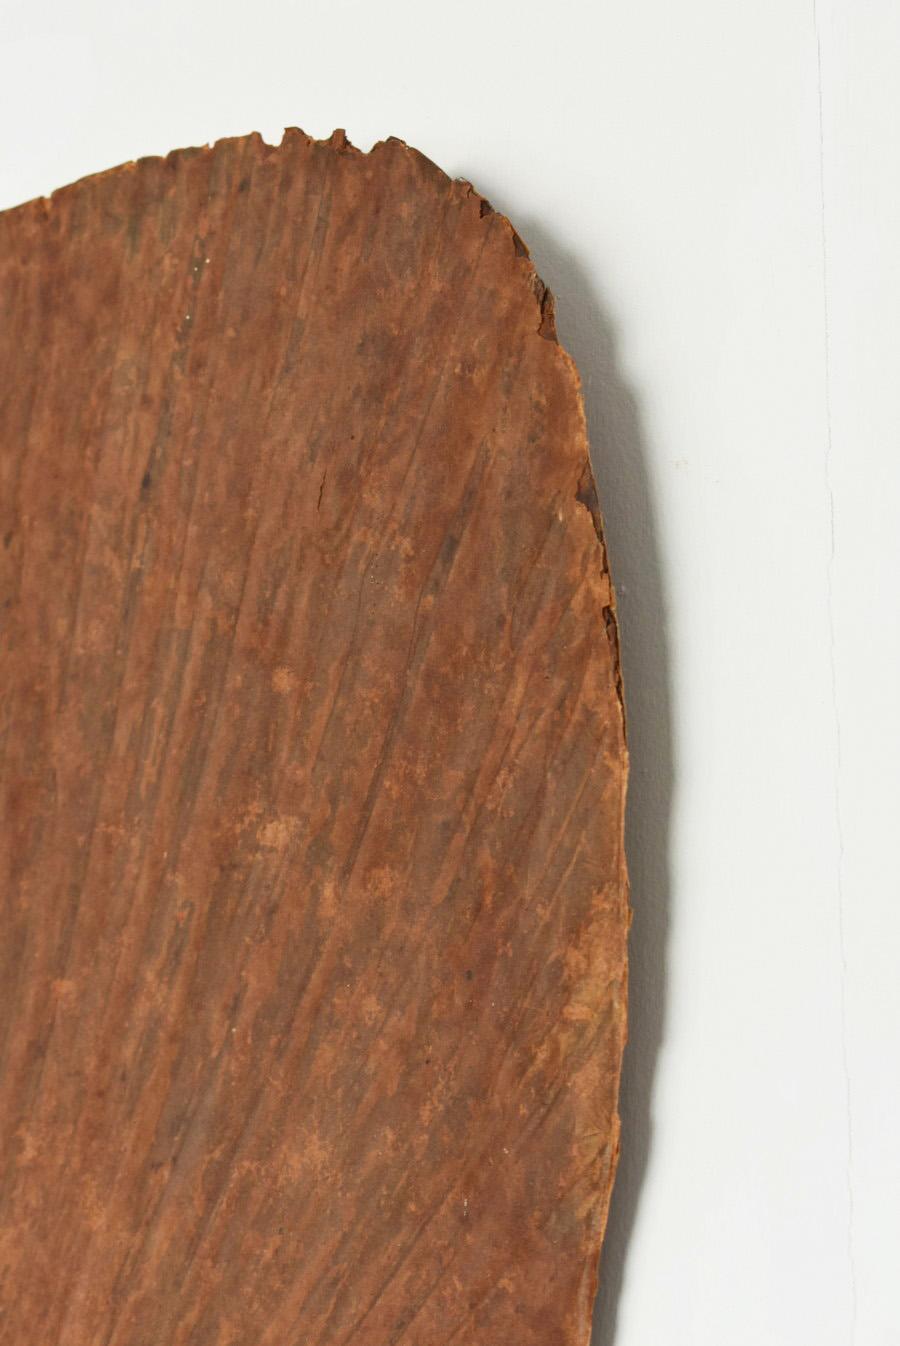 Very rare Korean antique fan made of bamboo and paper/like Ingo Maurer's Uchiwa 2